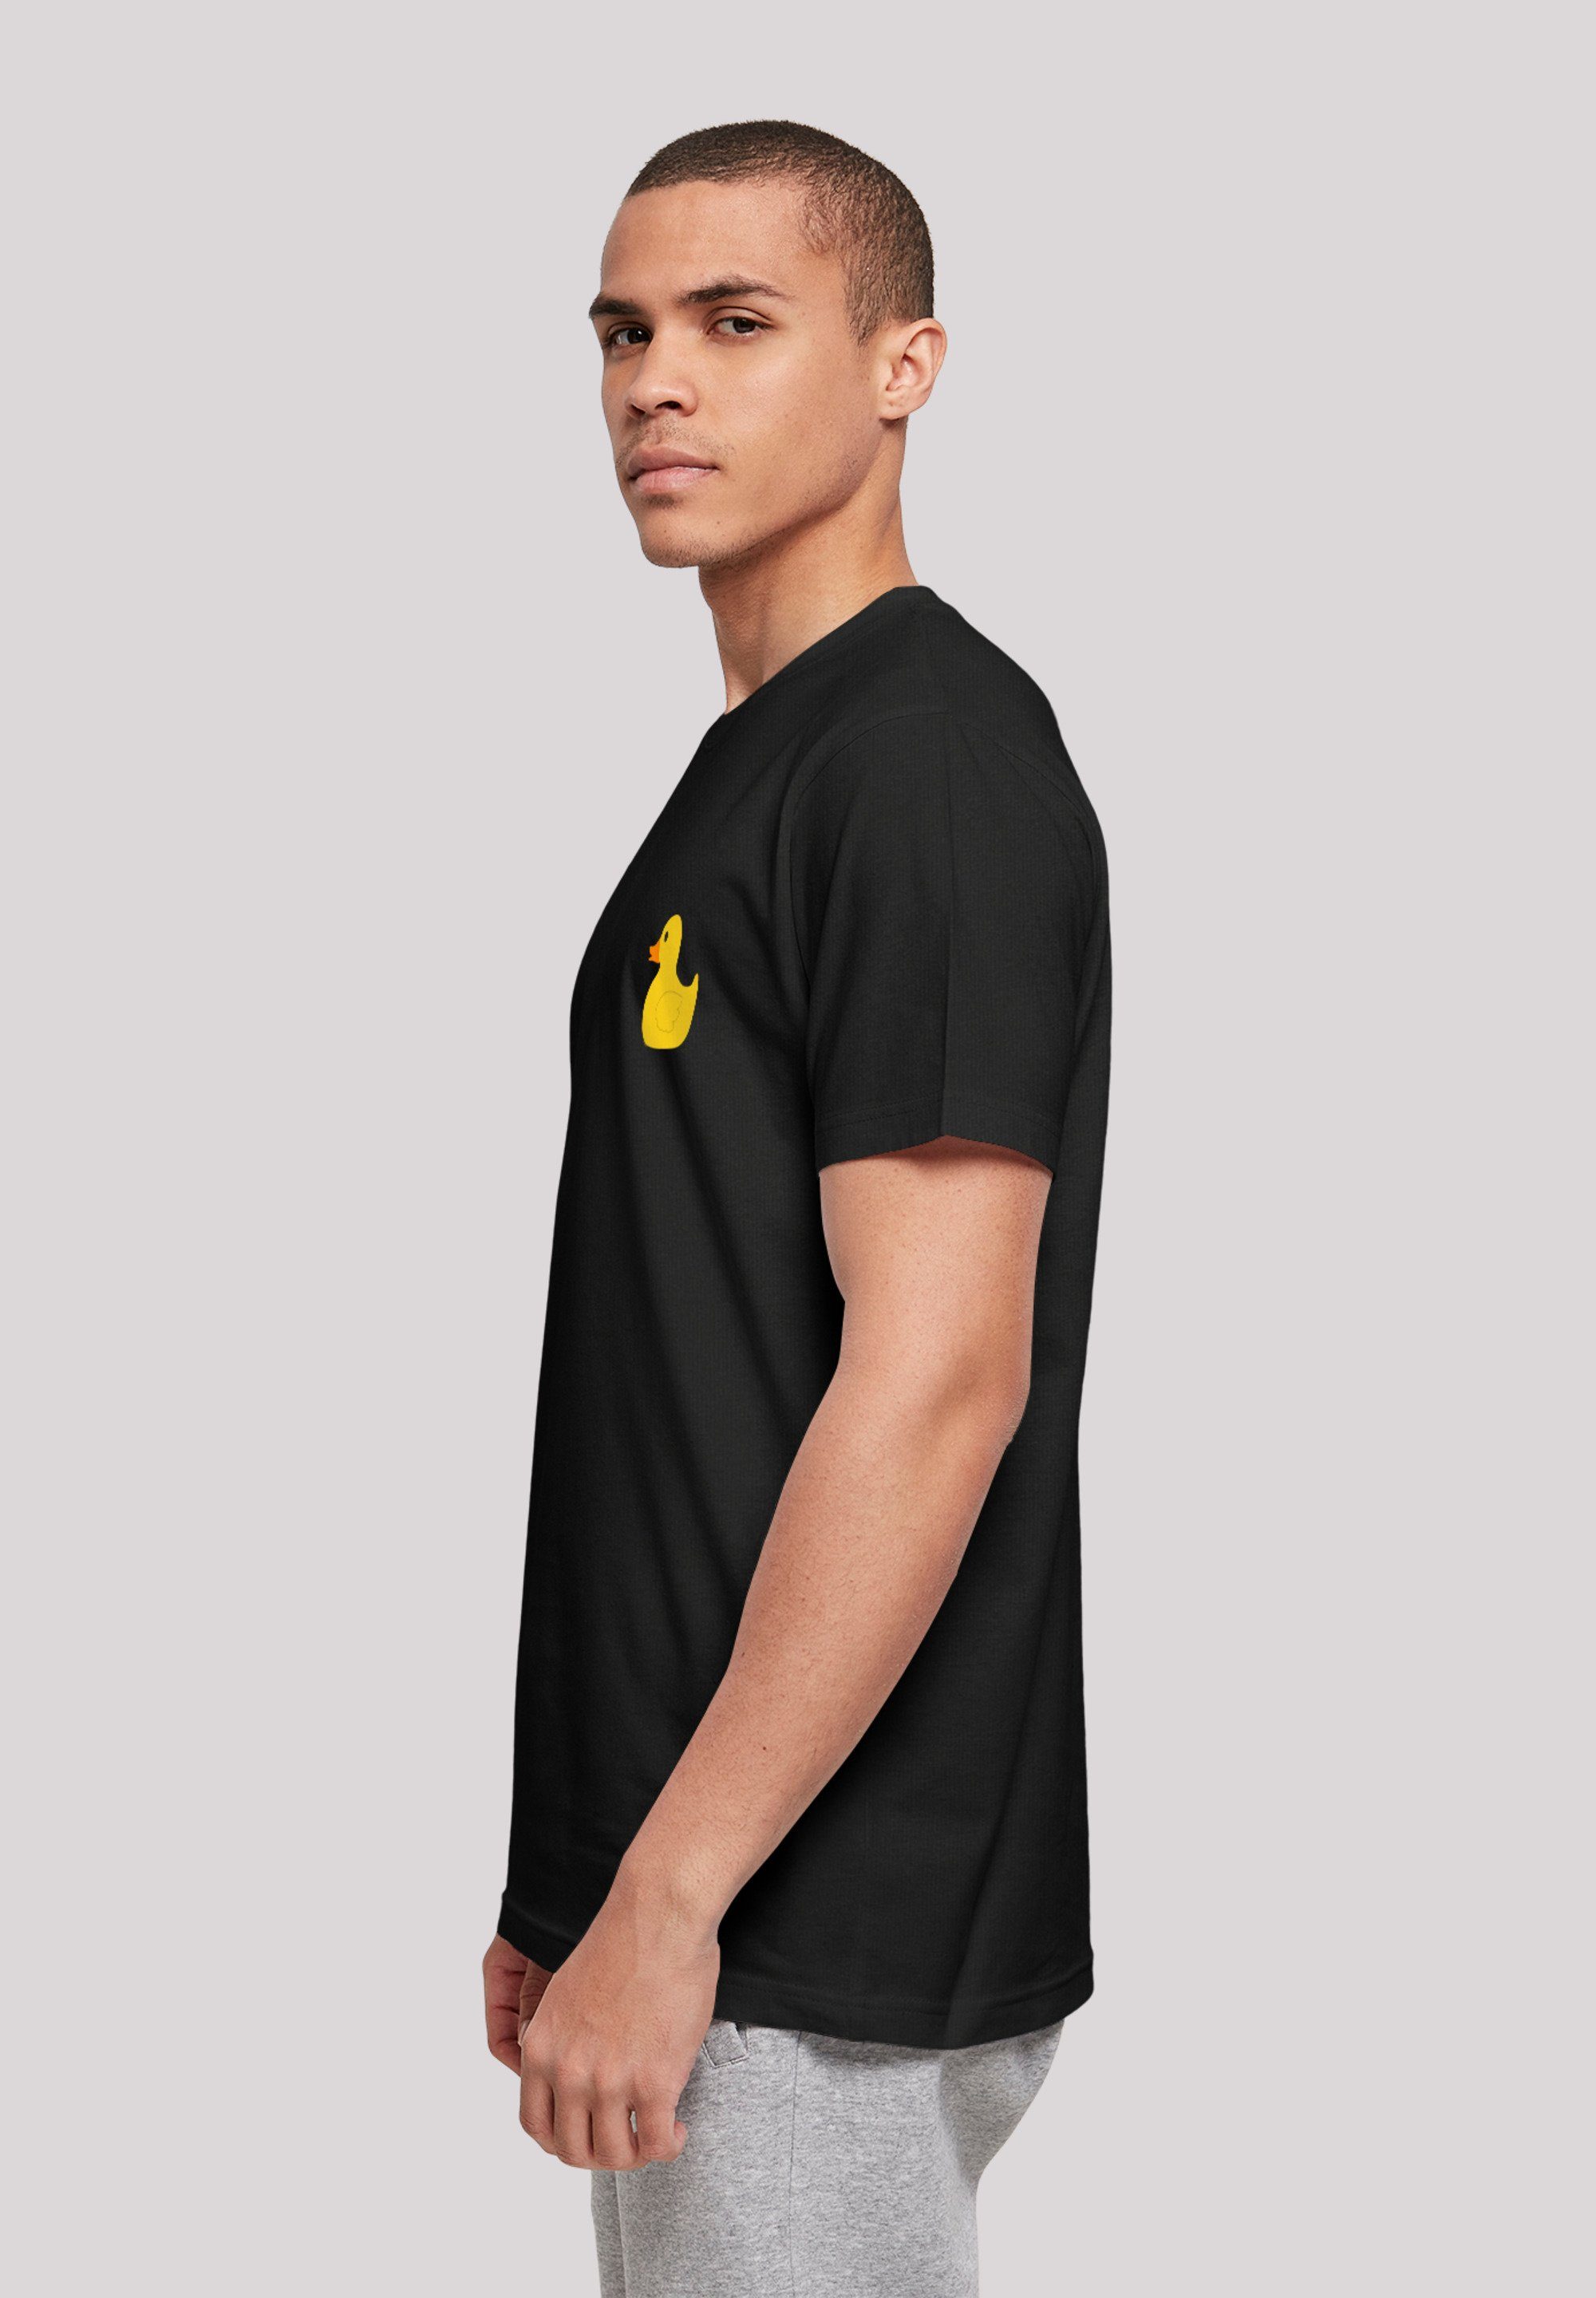 Print UNISEX schwarz TEE F4NT4STIC Duck Yellow T-Shirt Rubber